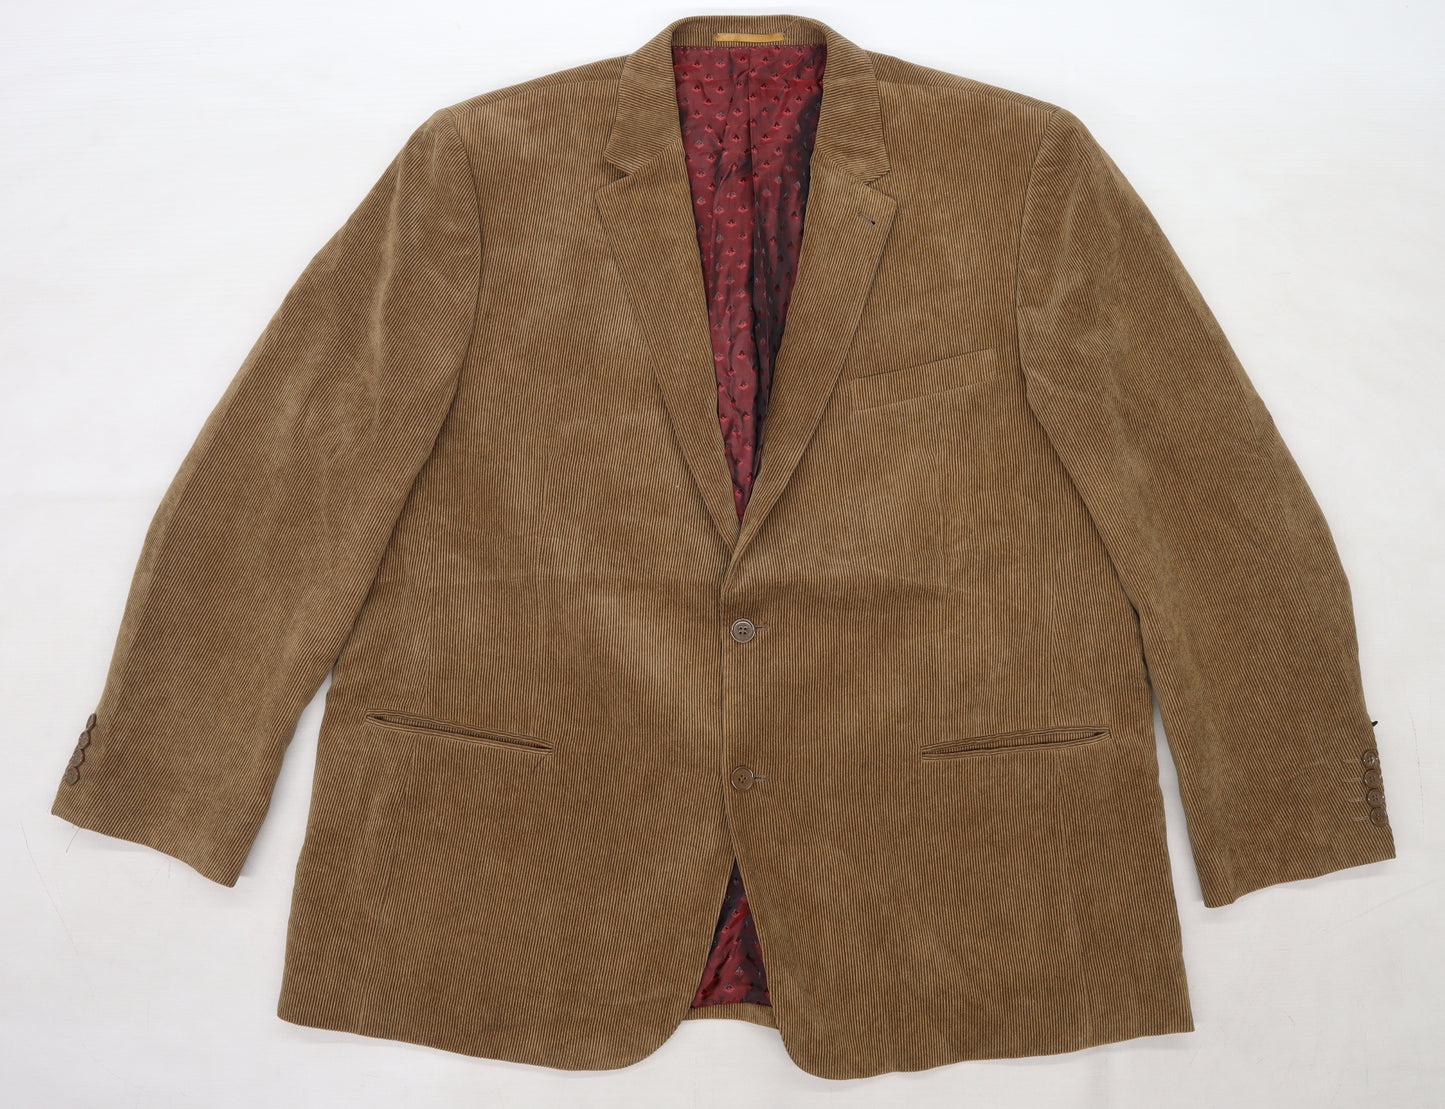 Skopes Mens Brown Striped Corduroy Jacket Suit Jacket Size XL